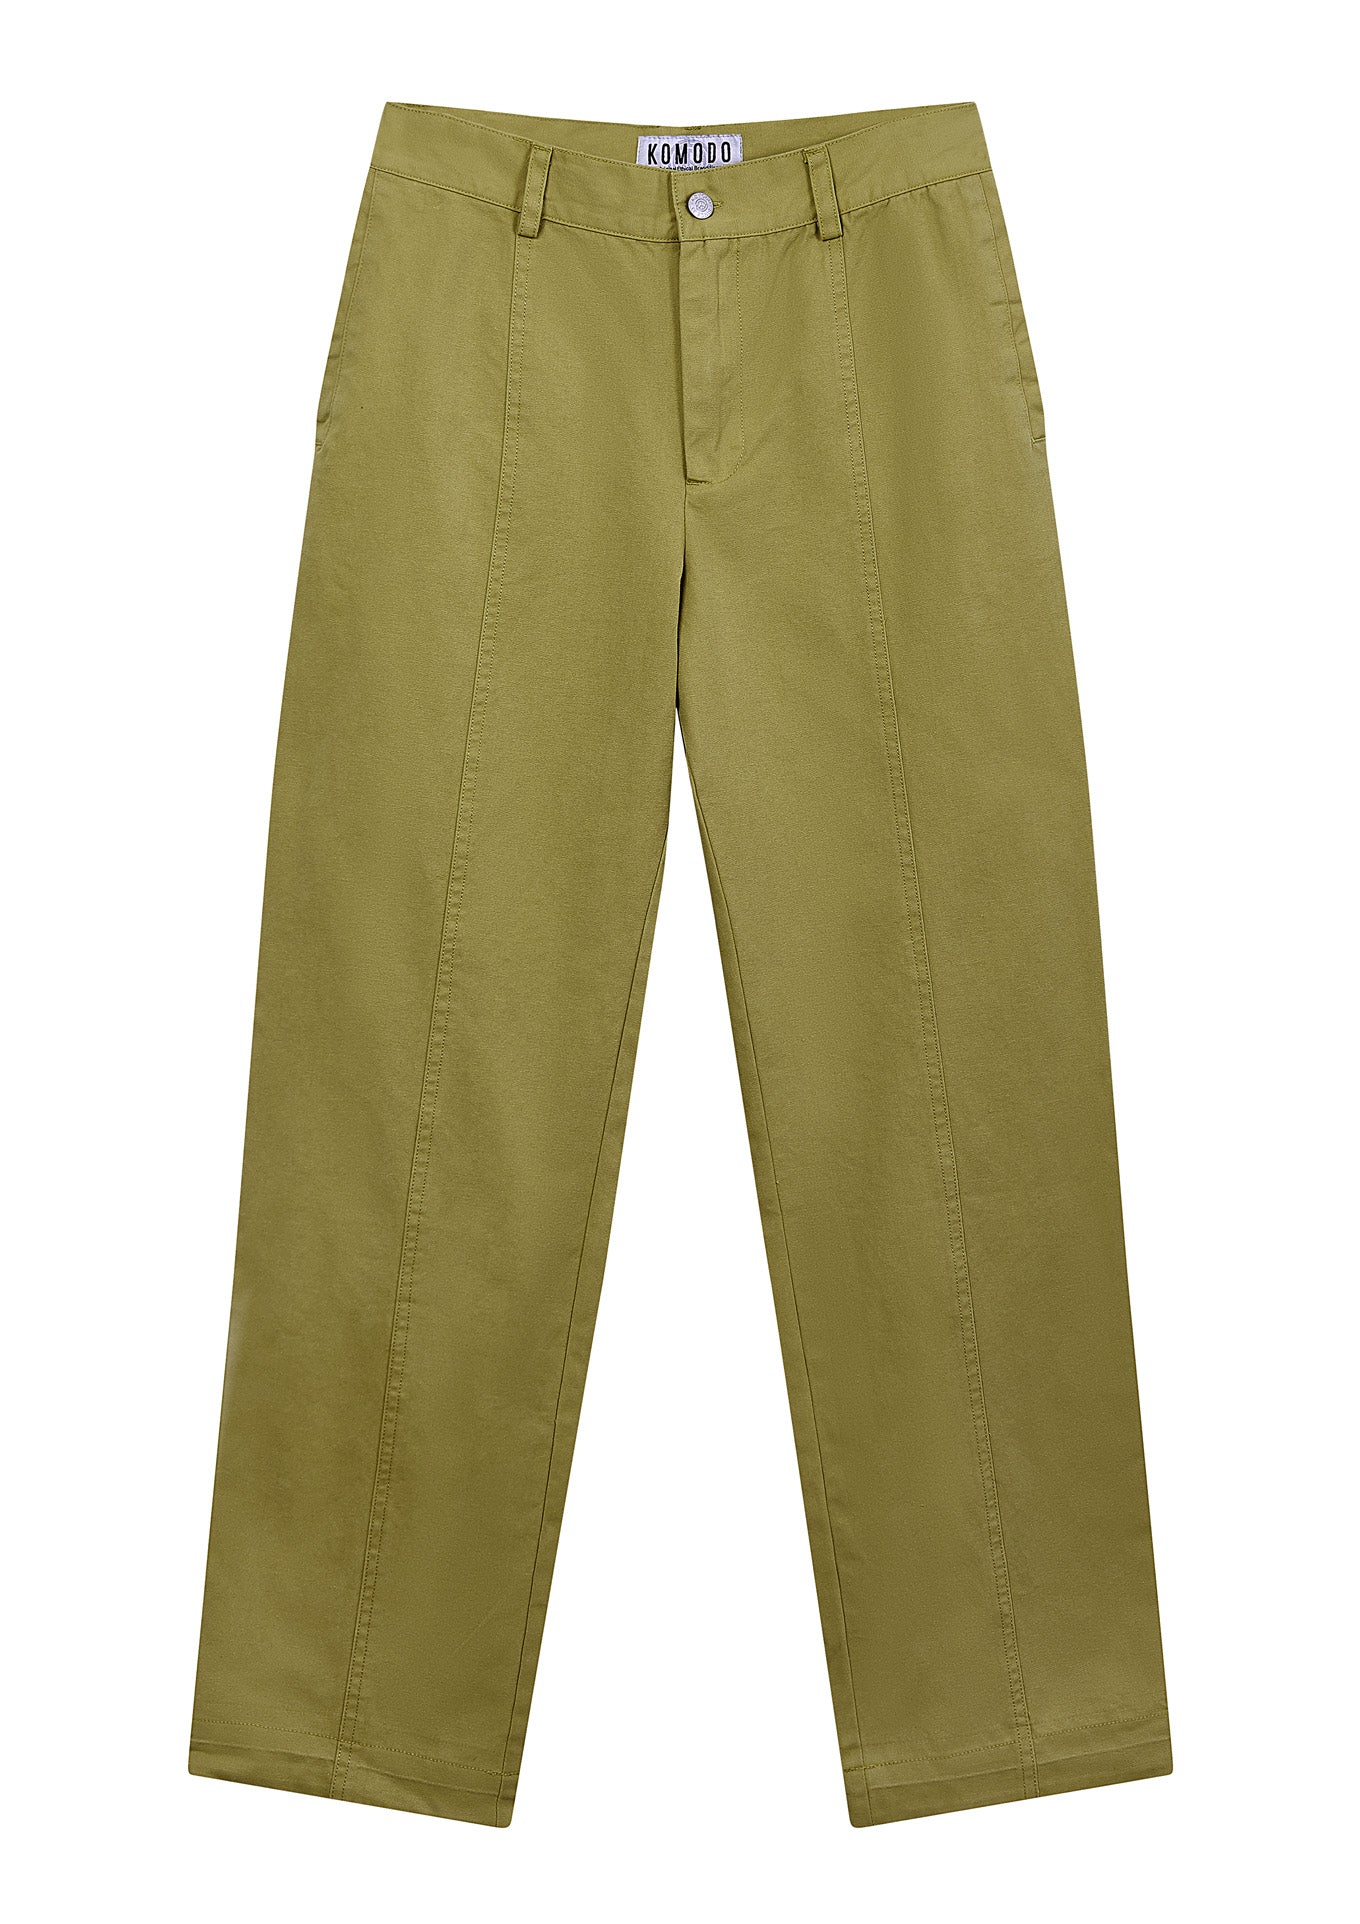 ZIGGY khaki trousers made from 100% organic cotton from Komodo